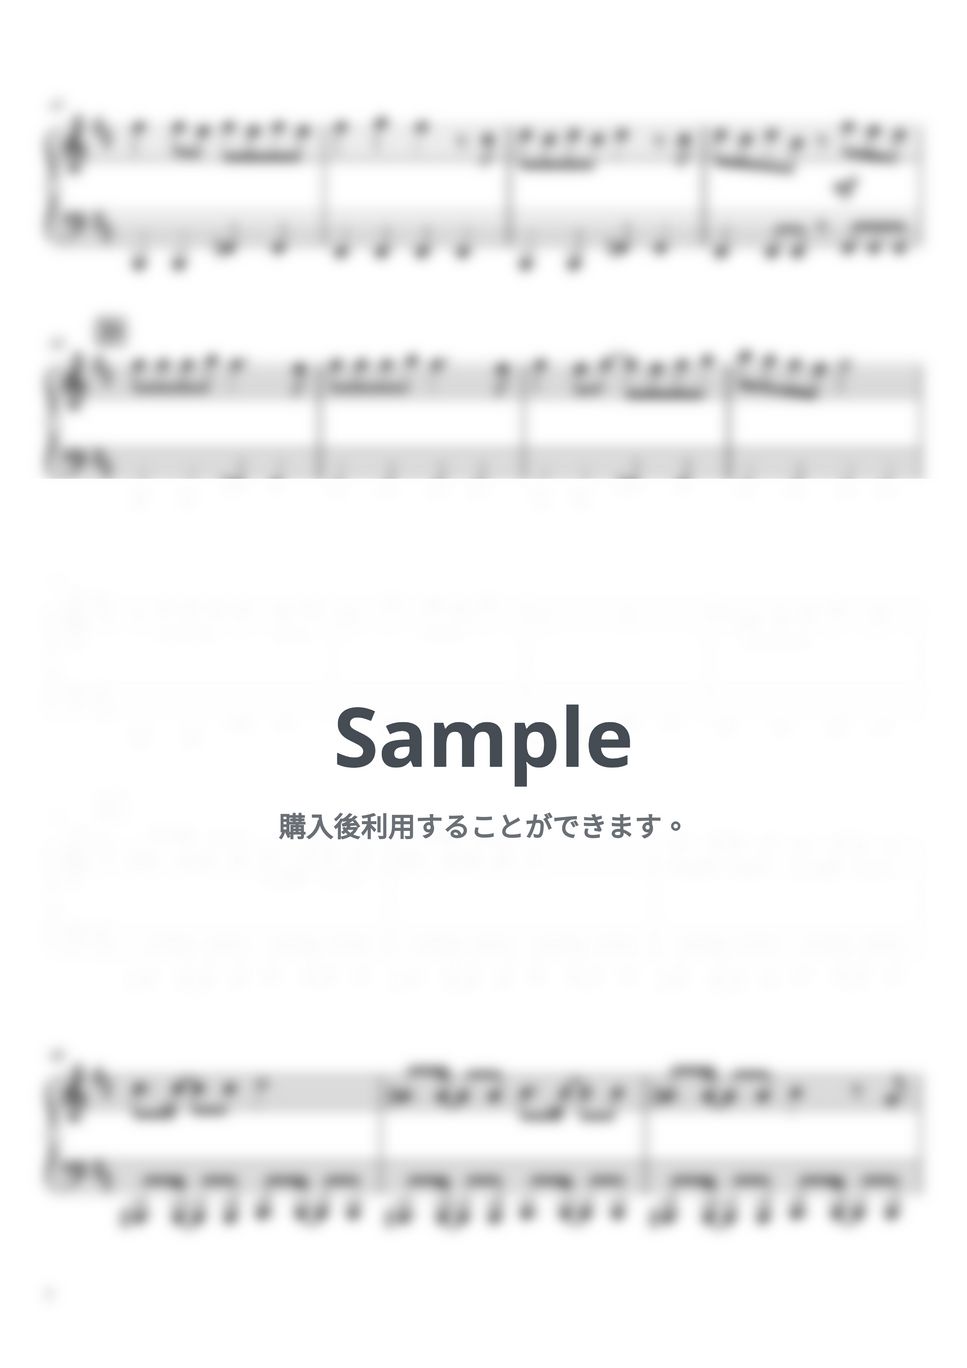 Ado - うっせぇわ (ピアノ 楽譜) by ITO